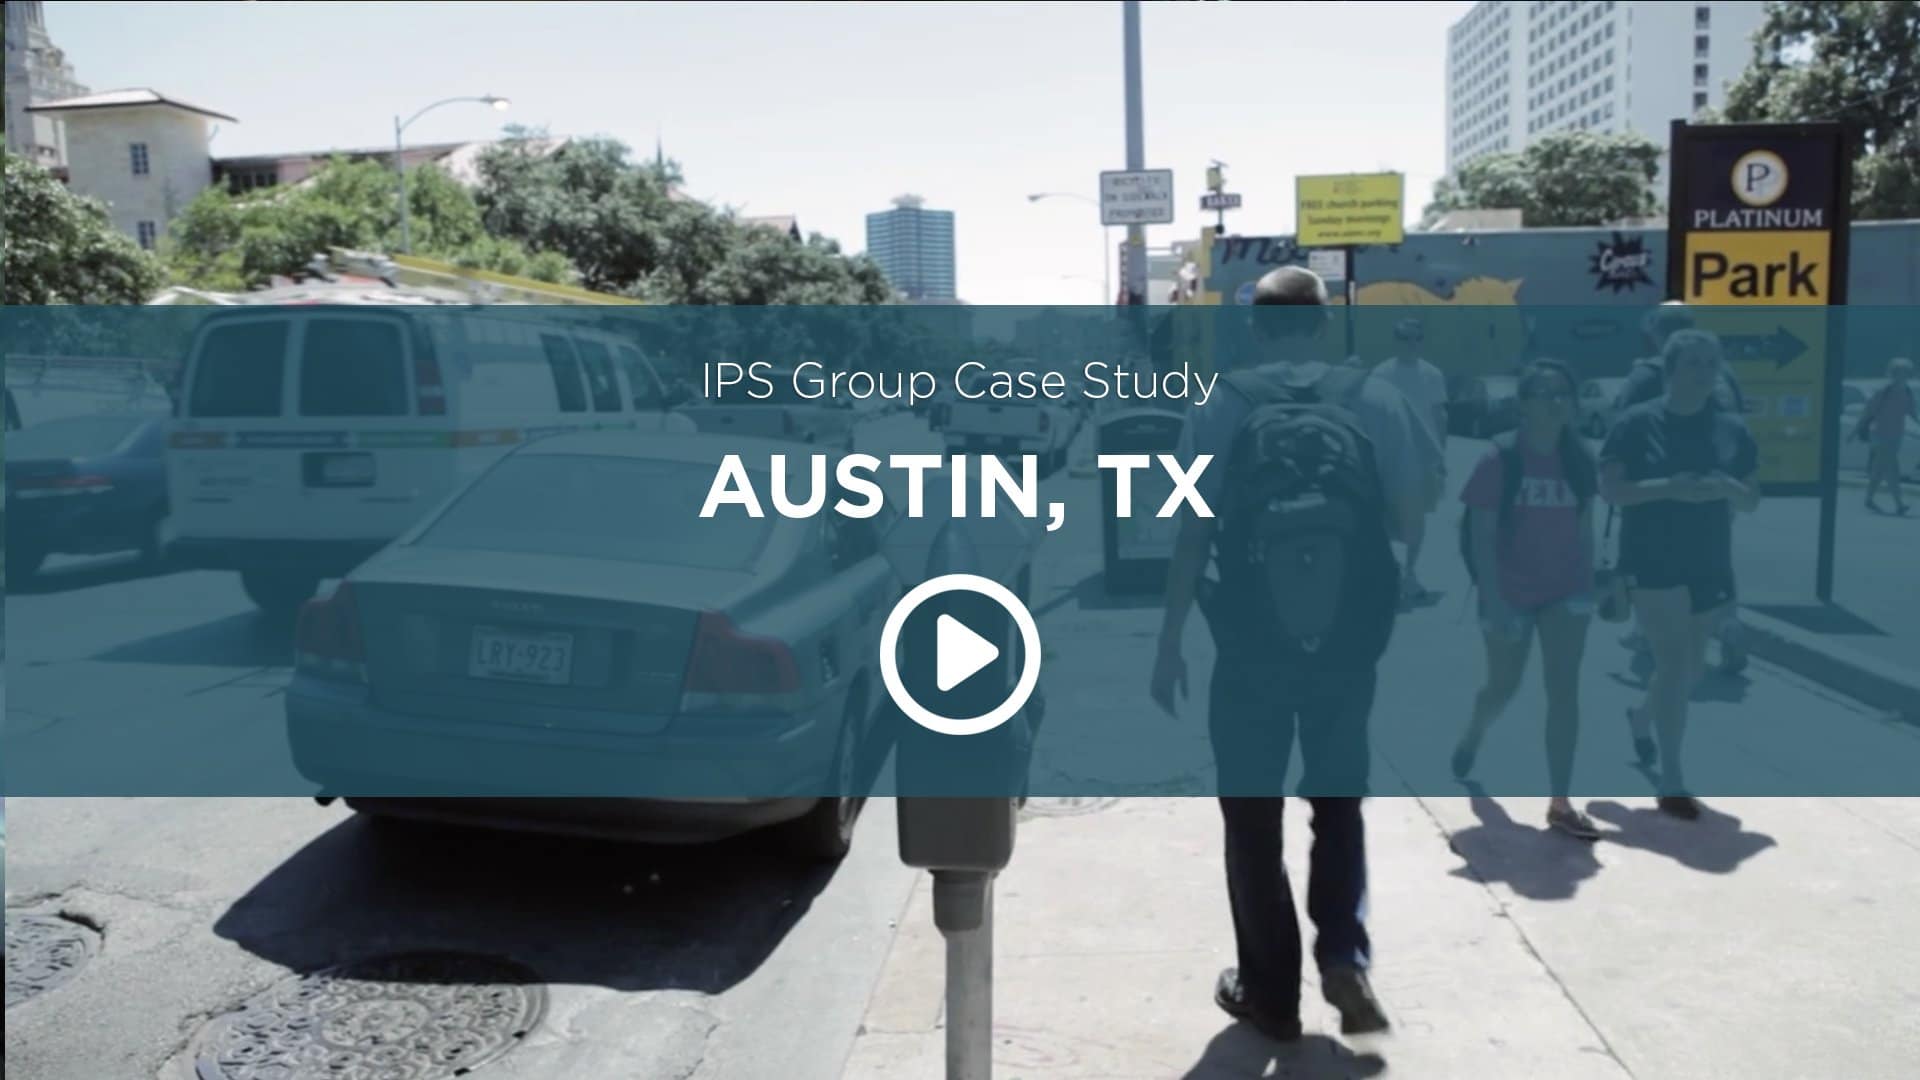 Austin TX Case Study Video